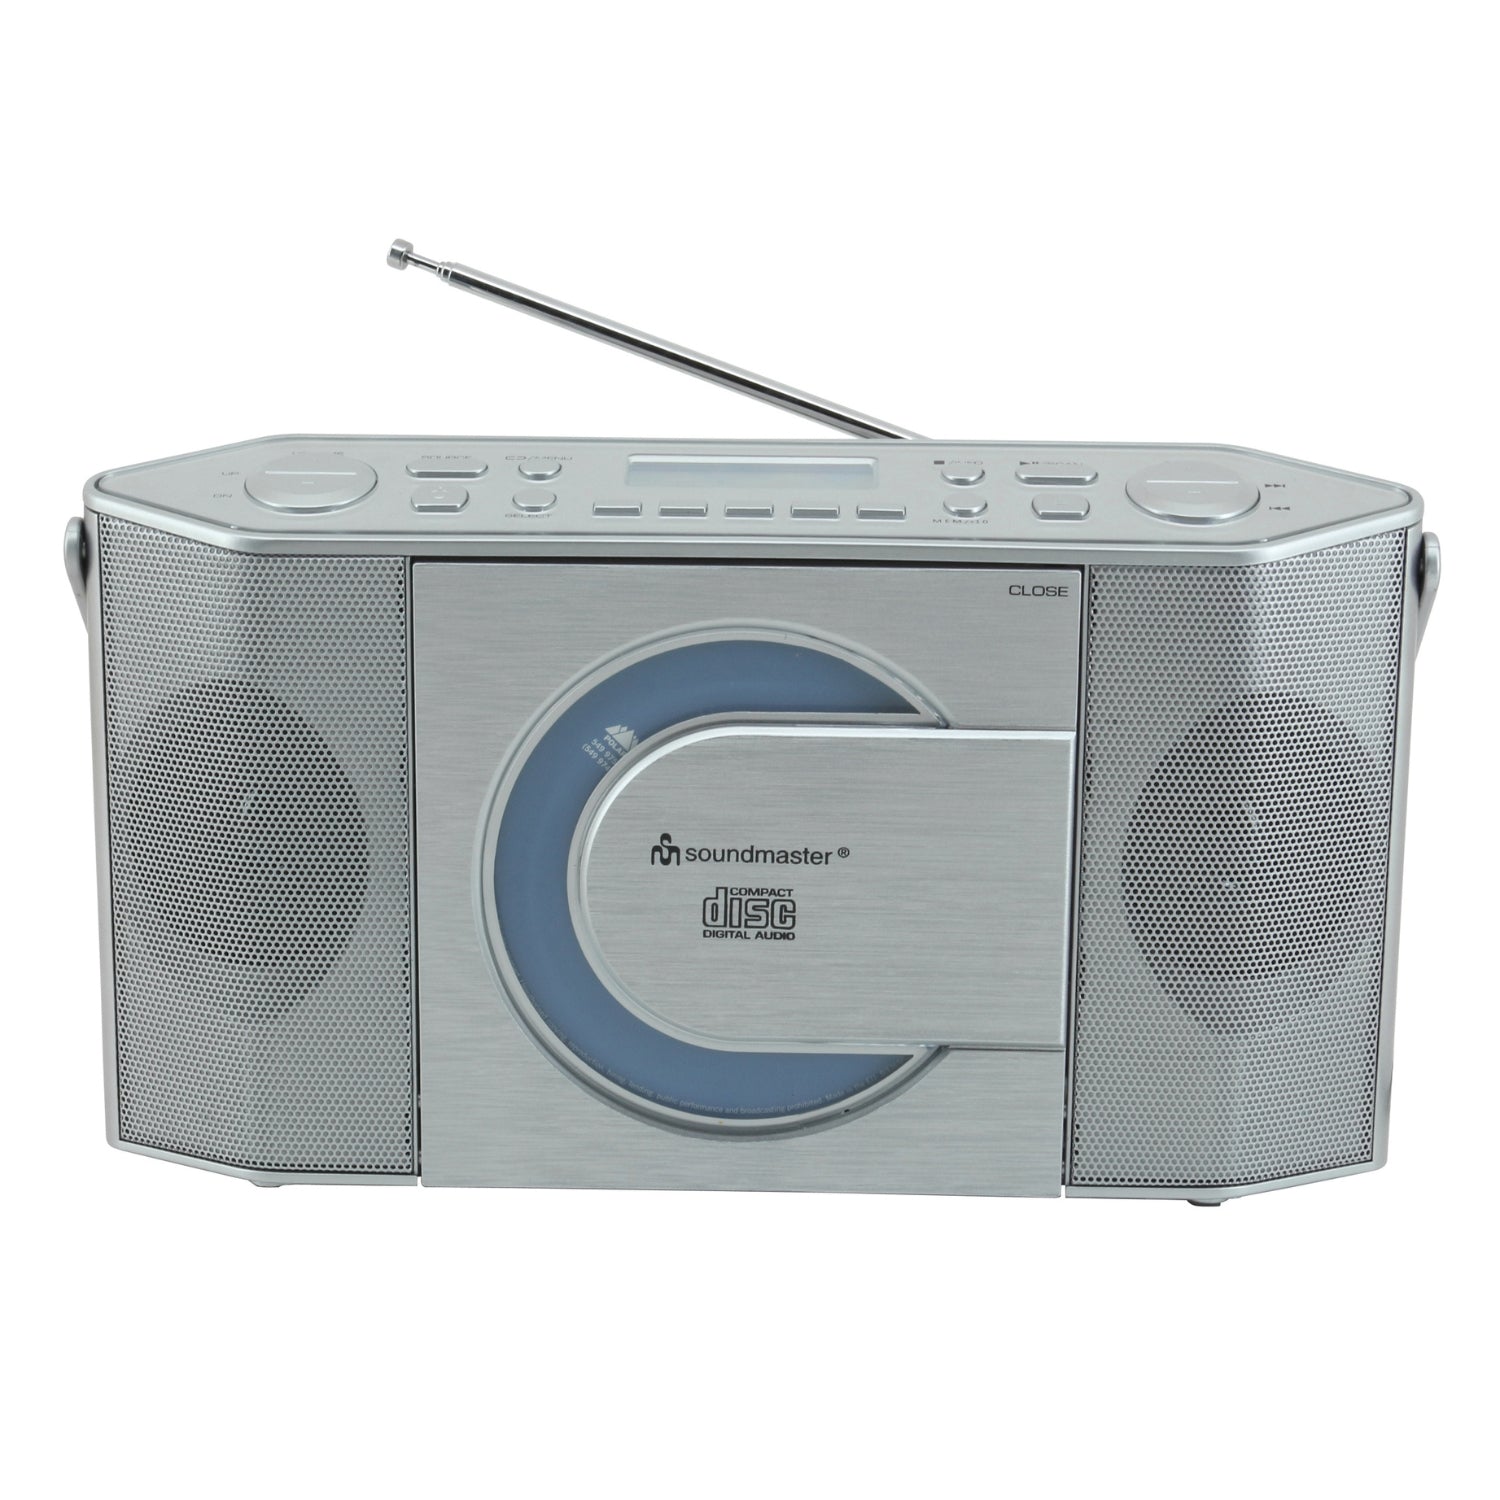 B-WARE Soundmaster RCD1770SI Digitalradio Radiorecorder DAB+ mit USB und CD-Player MP3 Kopfhörer Uhr